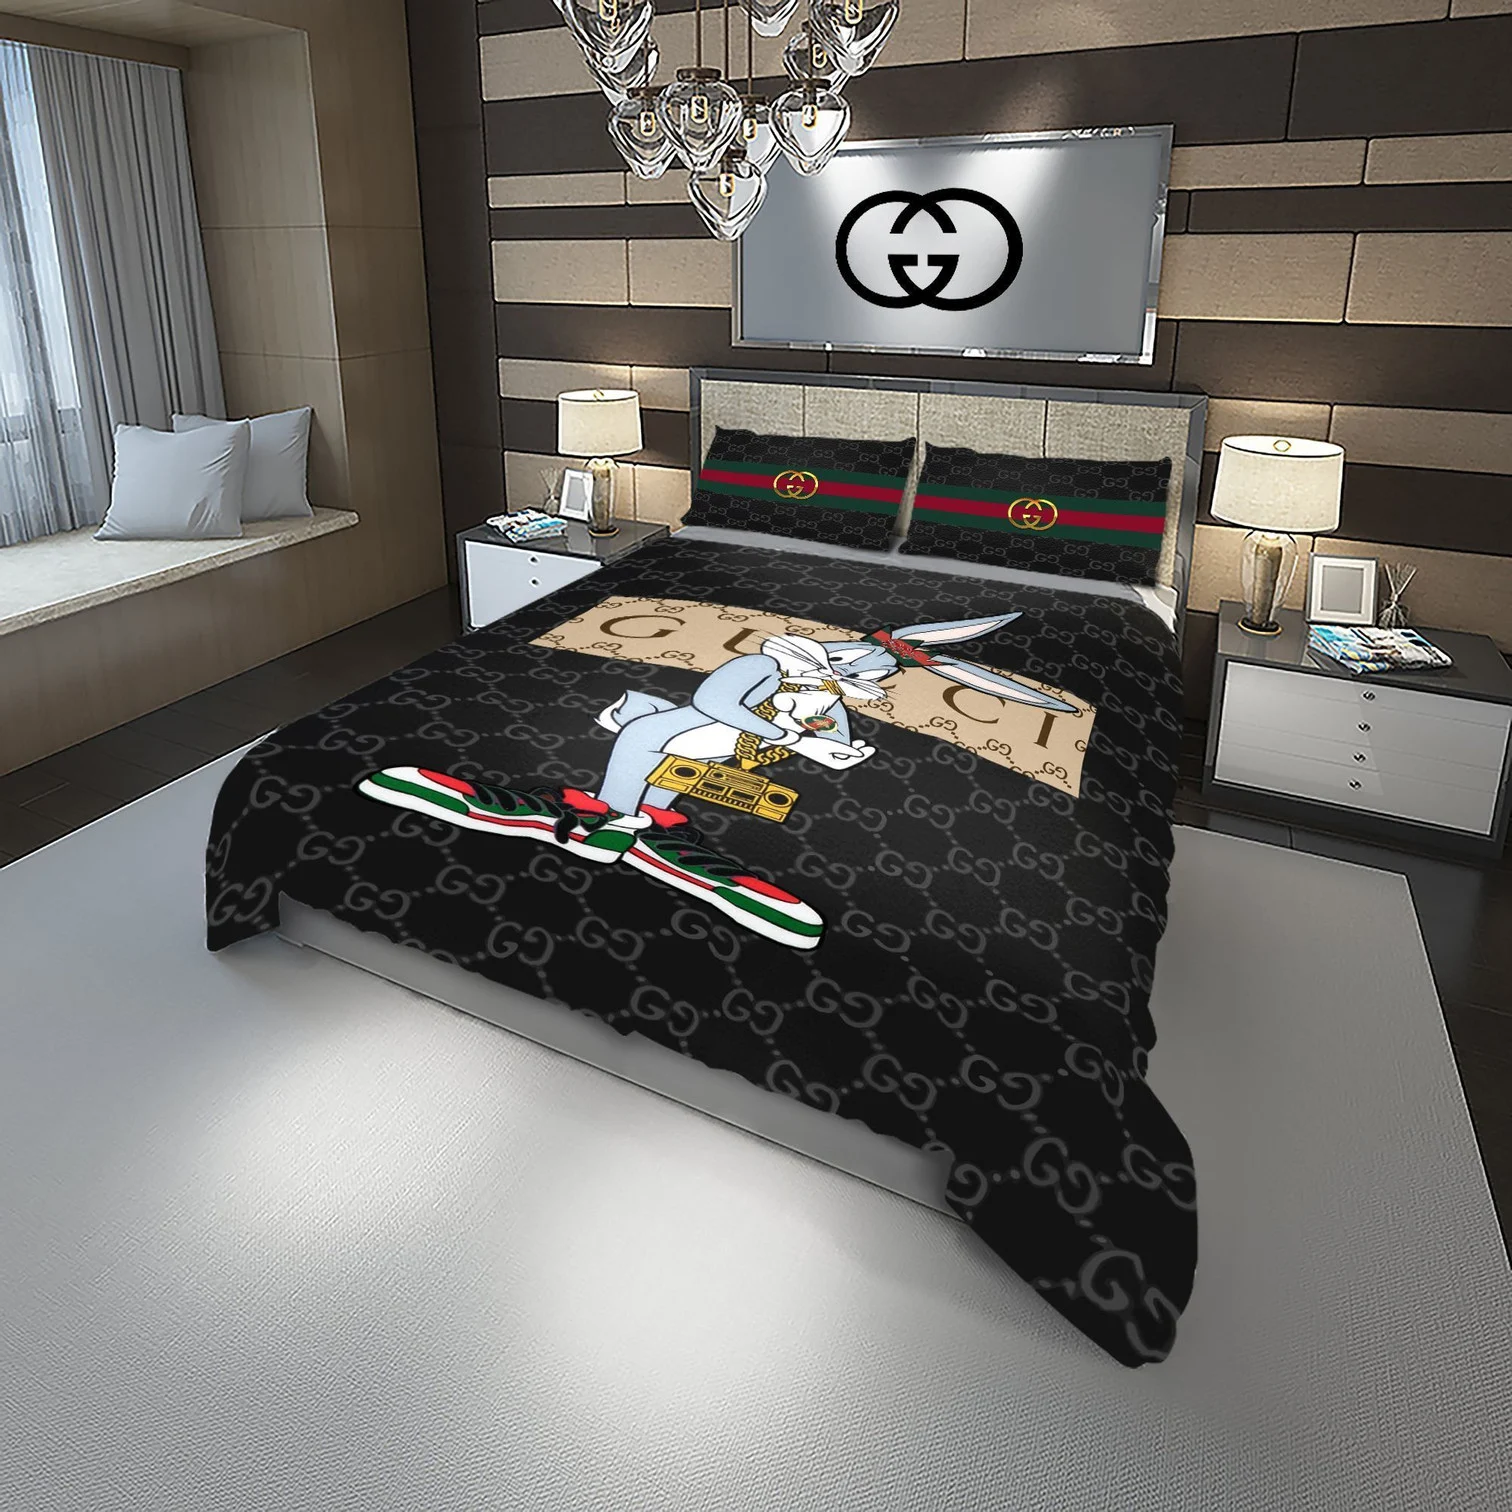 Gucci Bugs Bunny Radio Logo Brand Bedding Set Home Decor Bedroom Bedspread Luxury